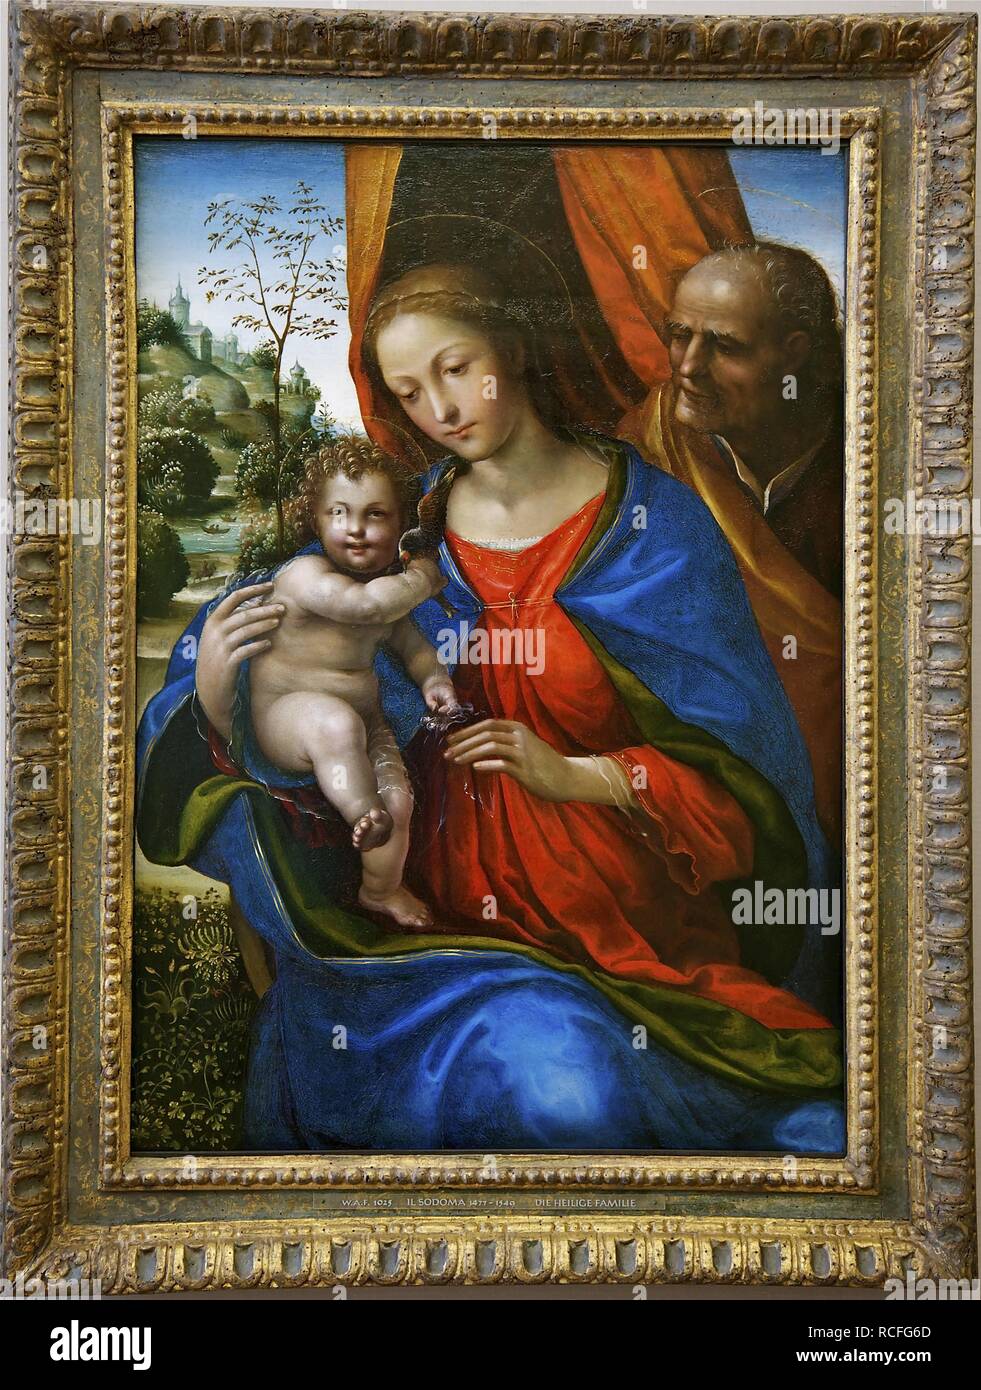 The Holy Family. Museum: Alte Pinakothek, Munich. Author: SODOMA. Stock Photo